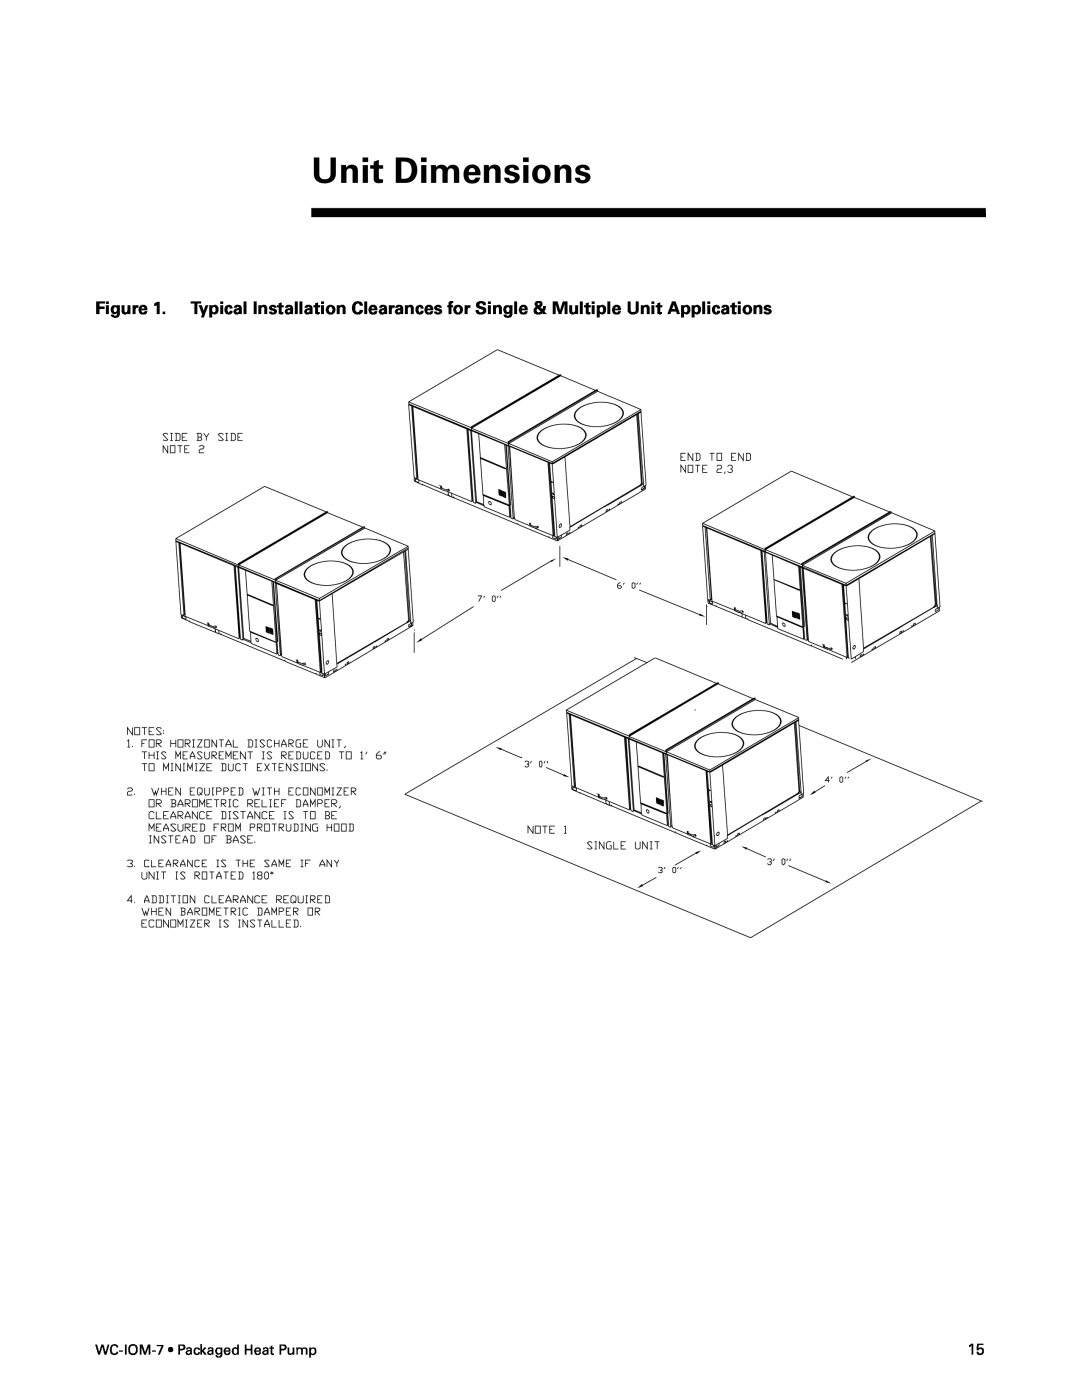 Trane manual Unit Dimensions, WC-IOM-7 Packaged Heat Pump 